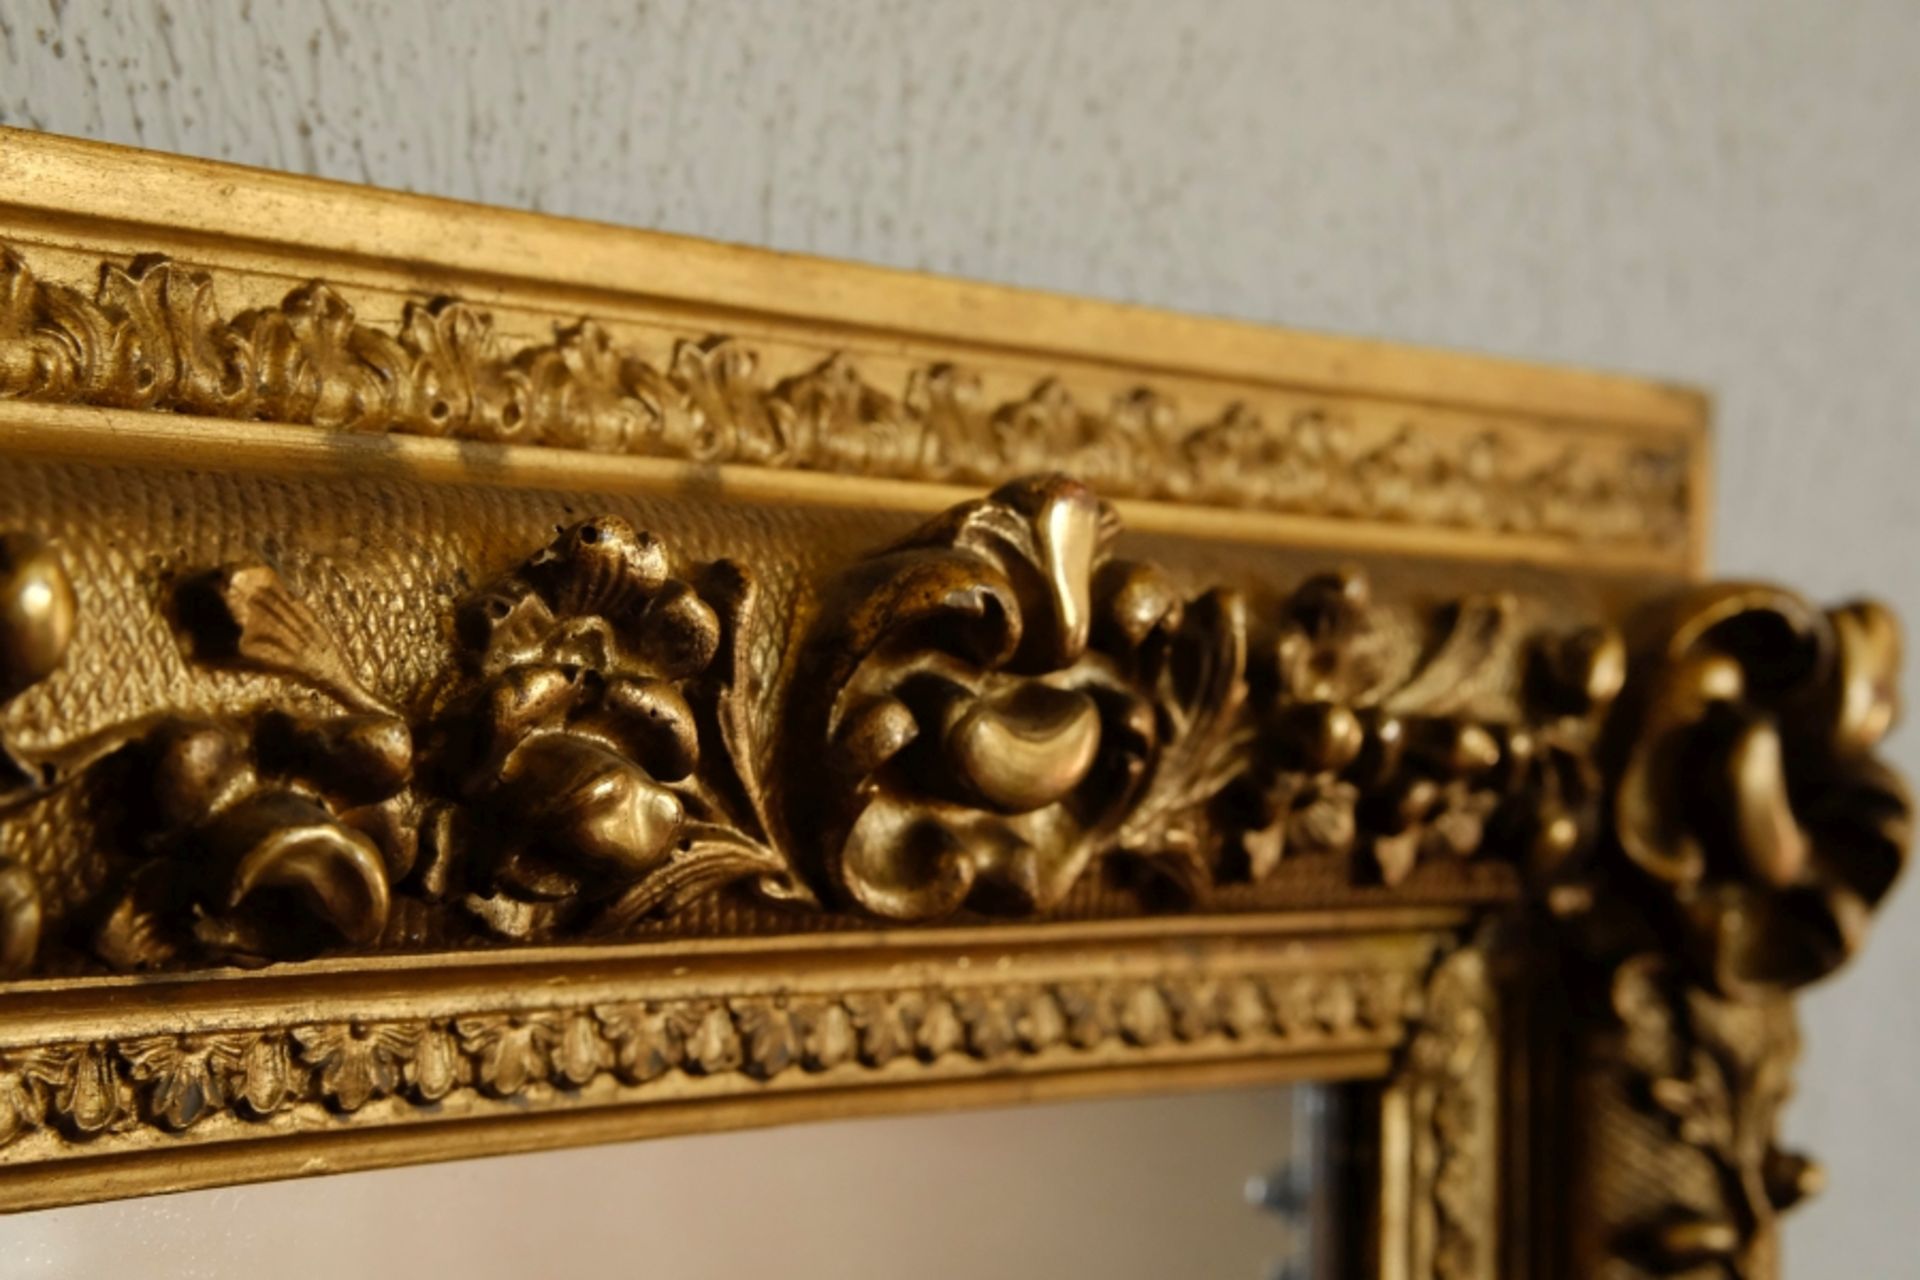 Spiegel, reich verzierter Goldrahmen, Gips-Ornamente, echt ölvergoldet, Schweiz um 1900, 75x49cm. - Bild 2 aus 5